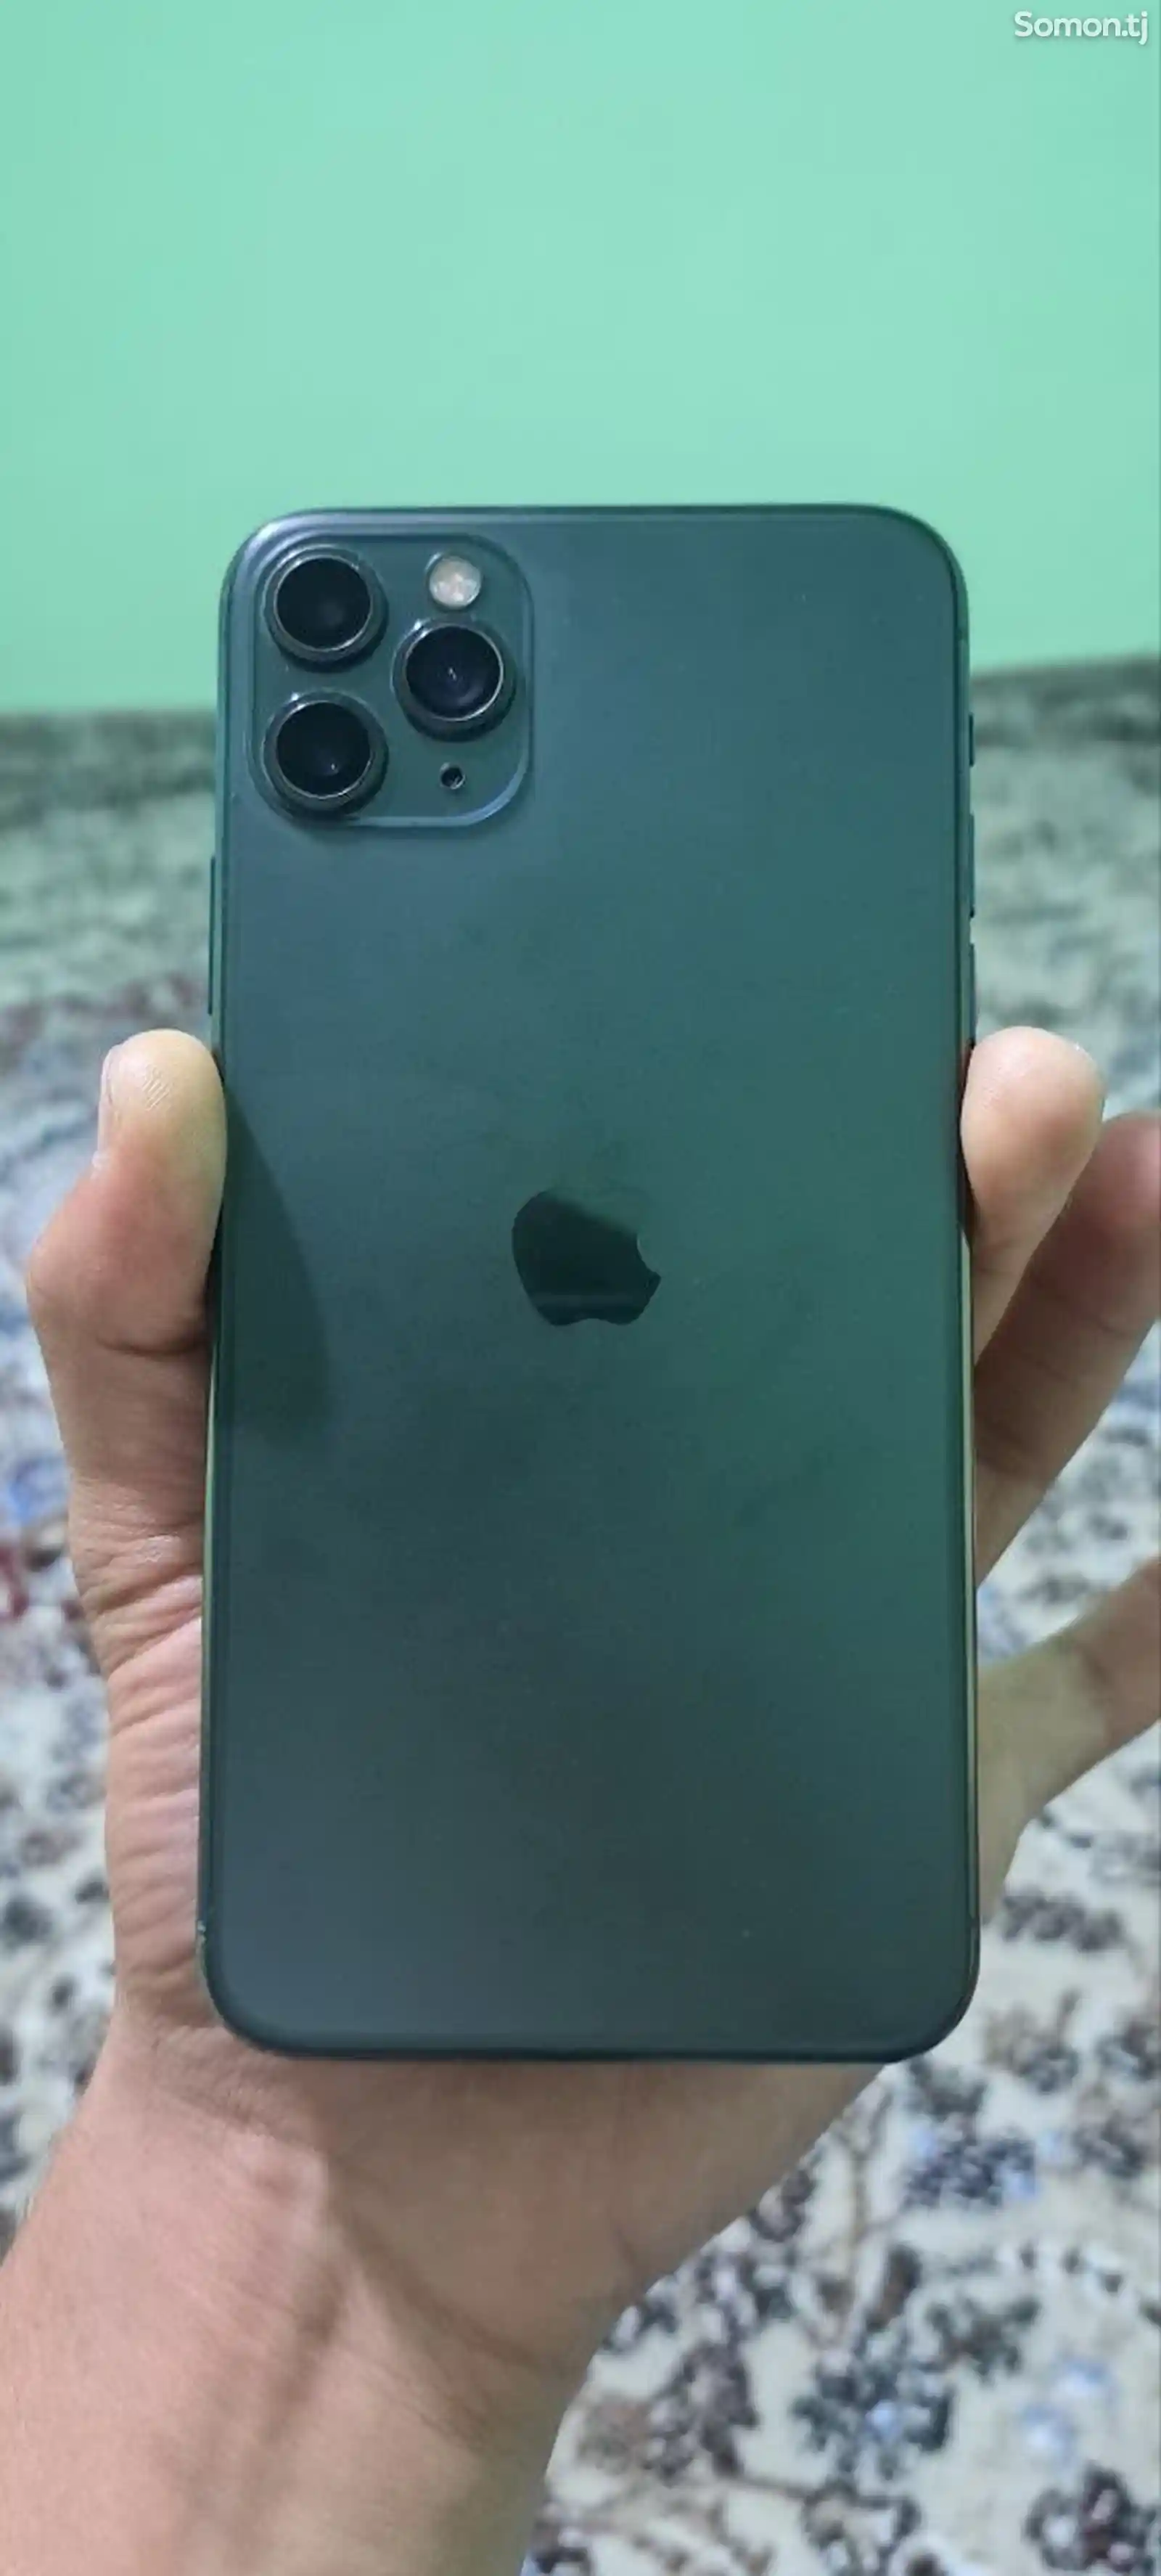 Apple iPhone 11 Pro Max, 64 gb, Space Grey-3